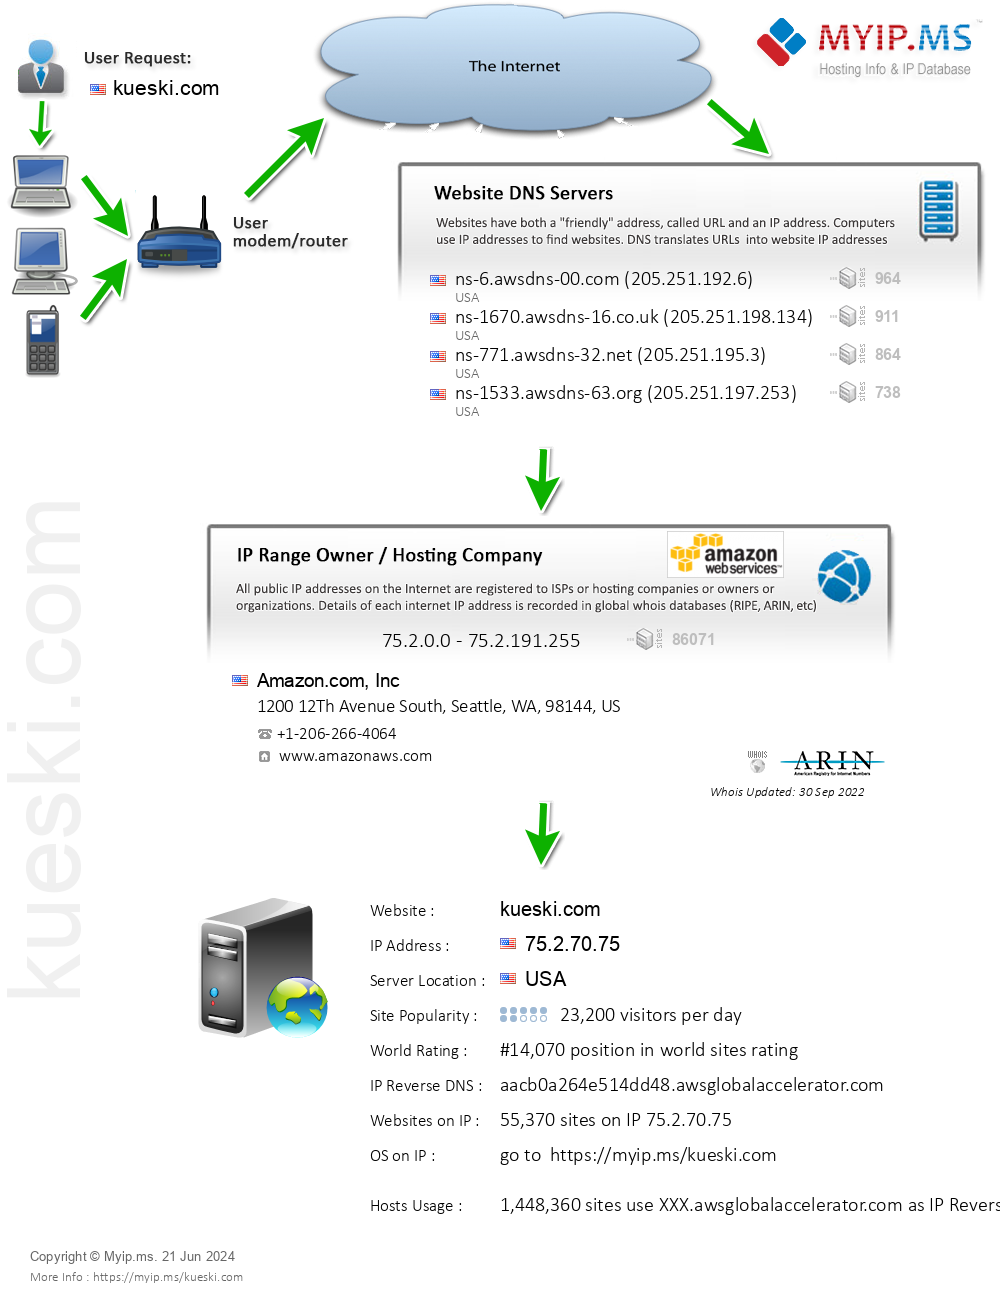 Kueski.com - Website Hosting Visual IP Diagram